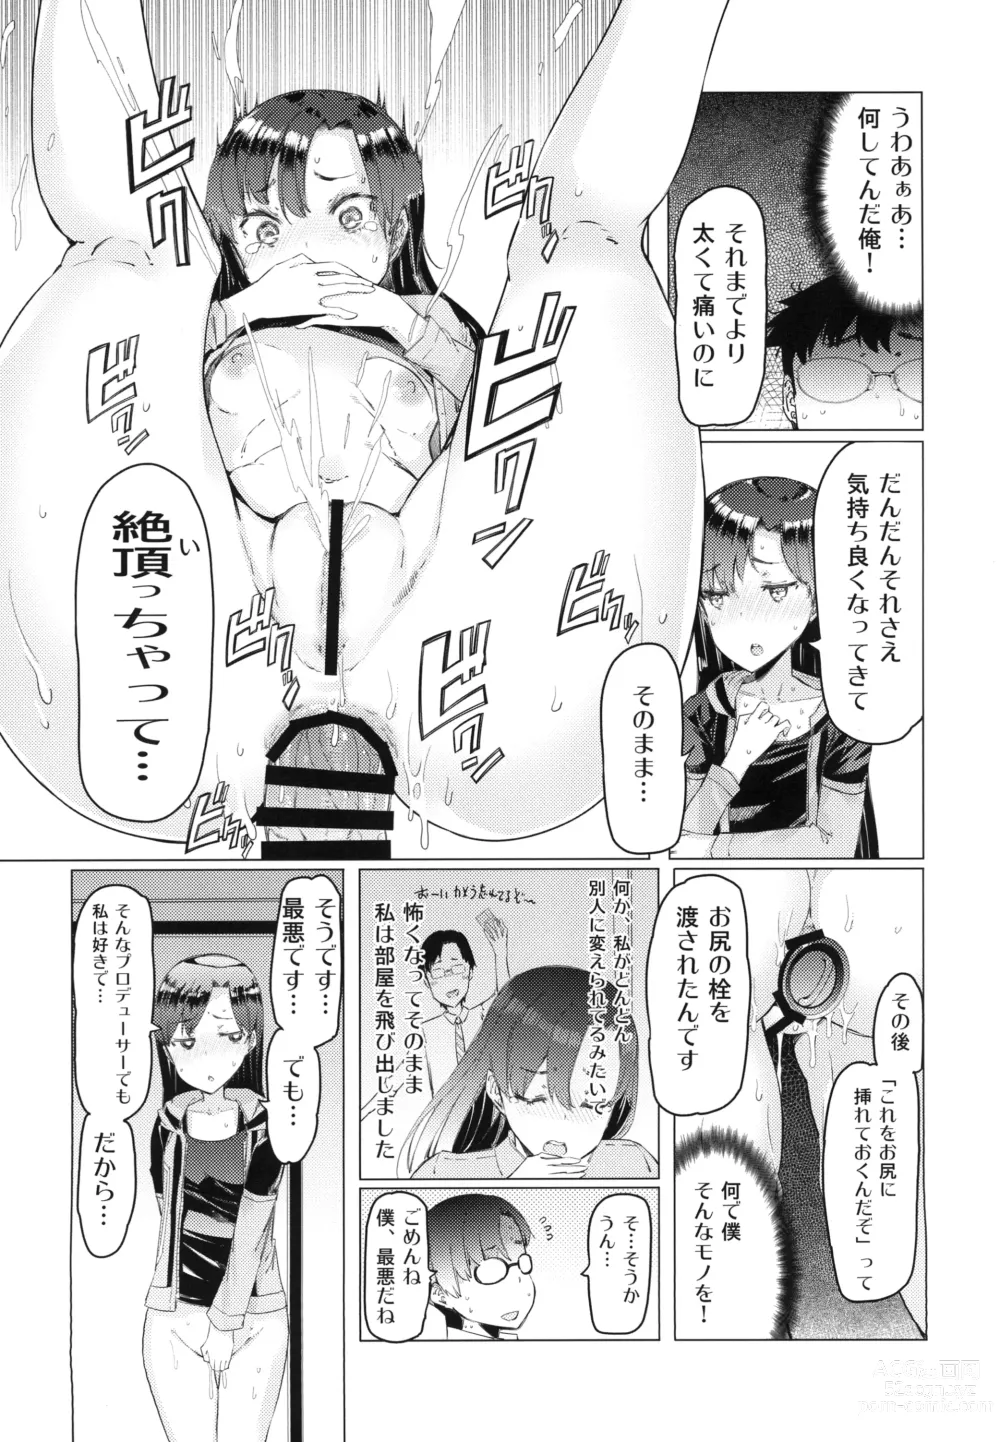 Page 7 of doujinshi HOP vol. 03 Final Episode